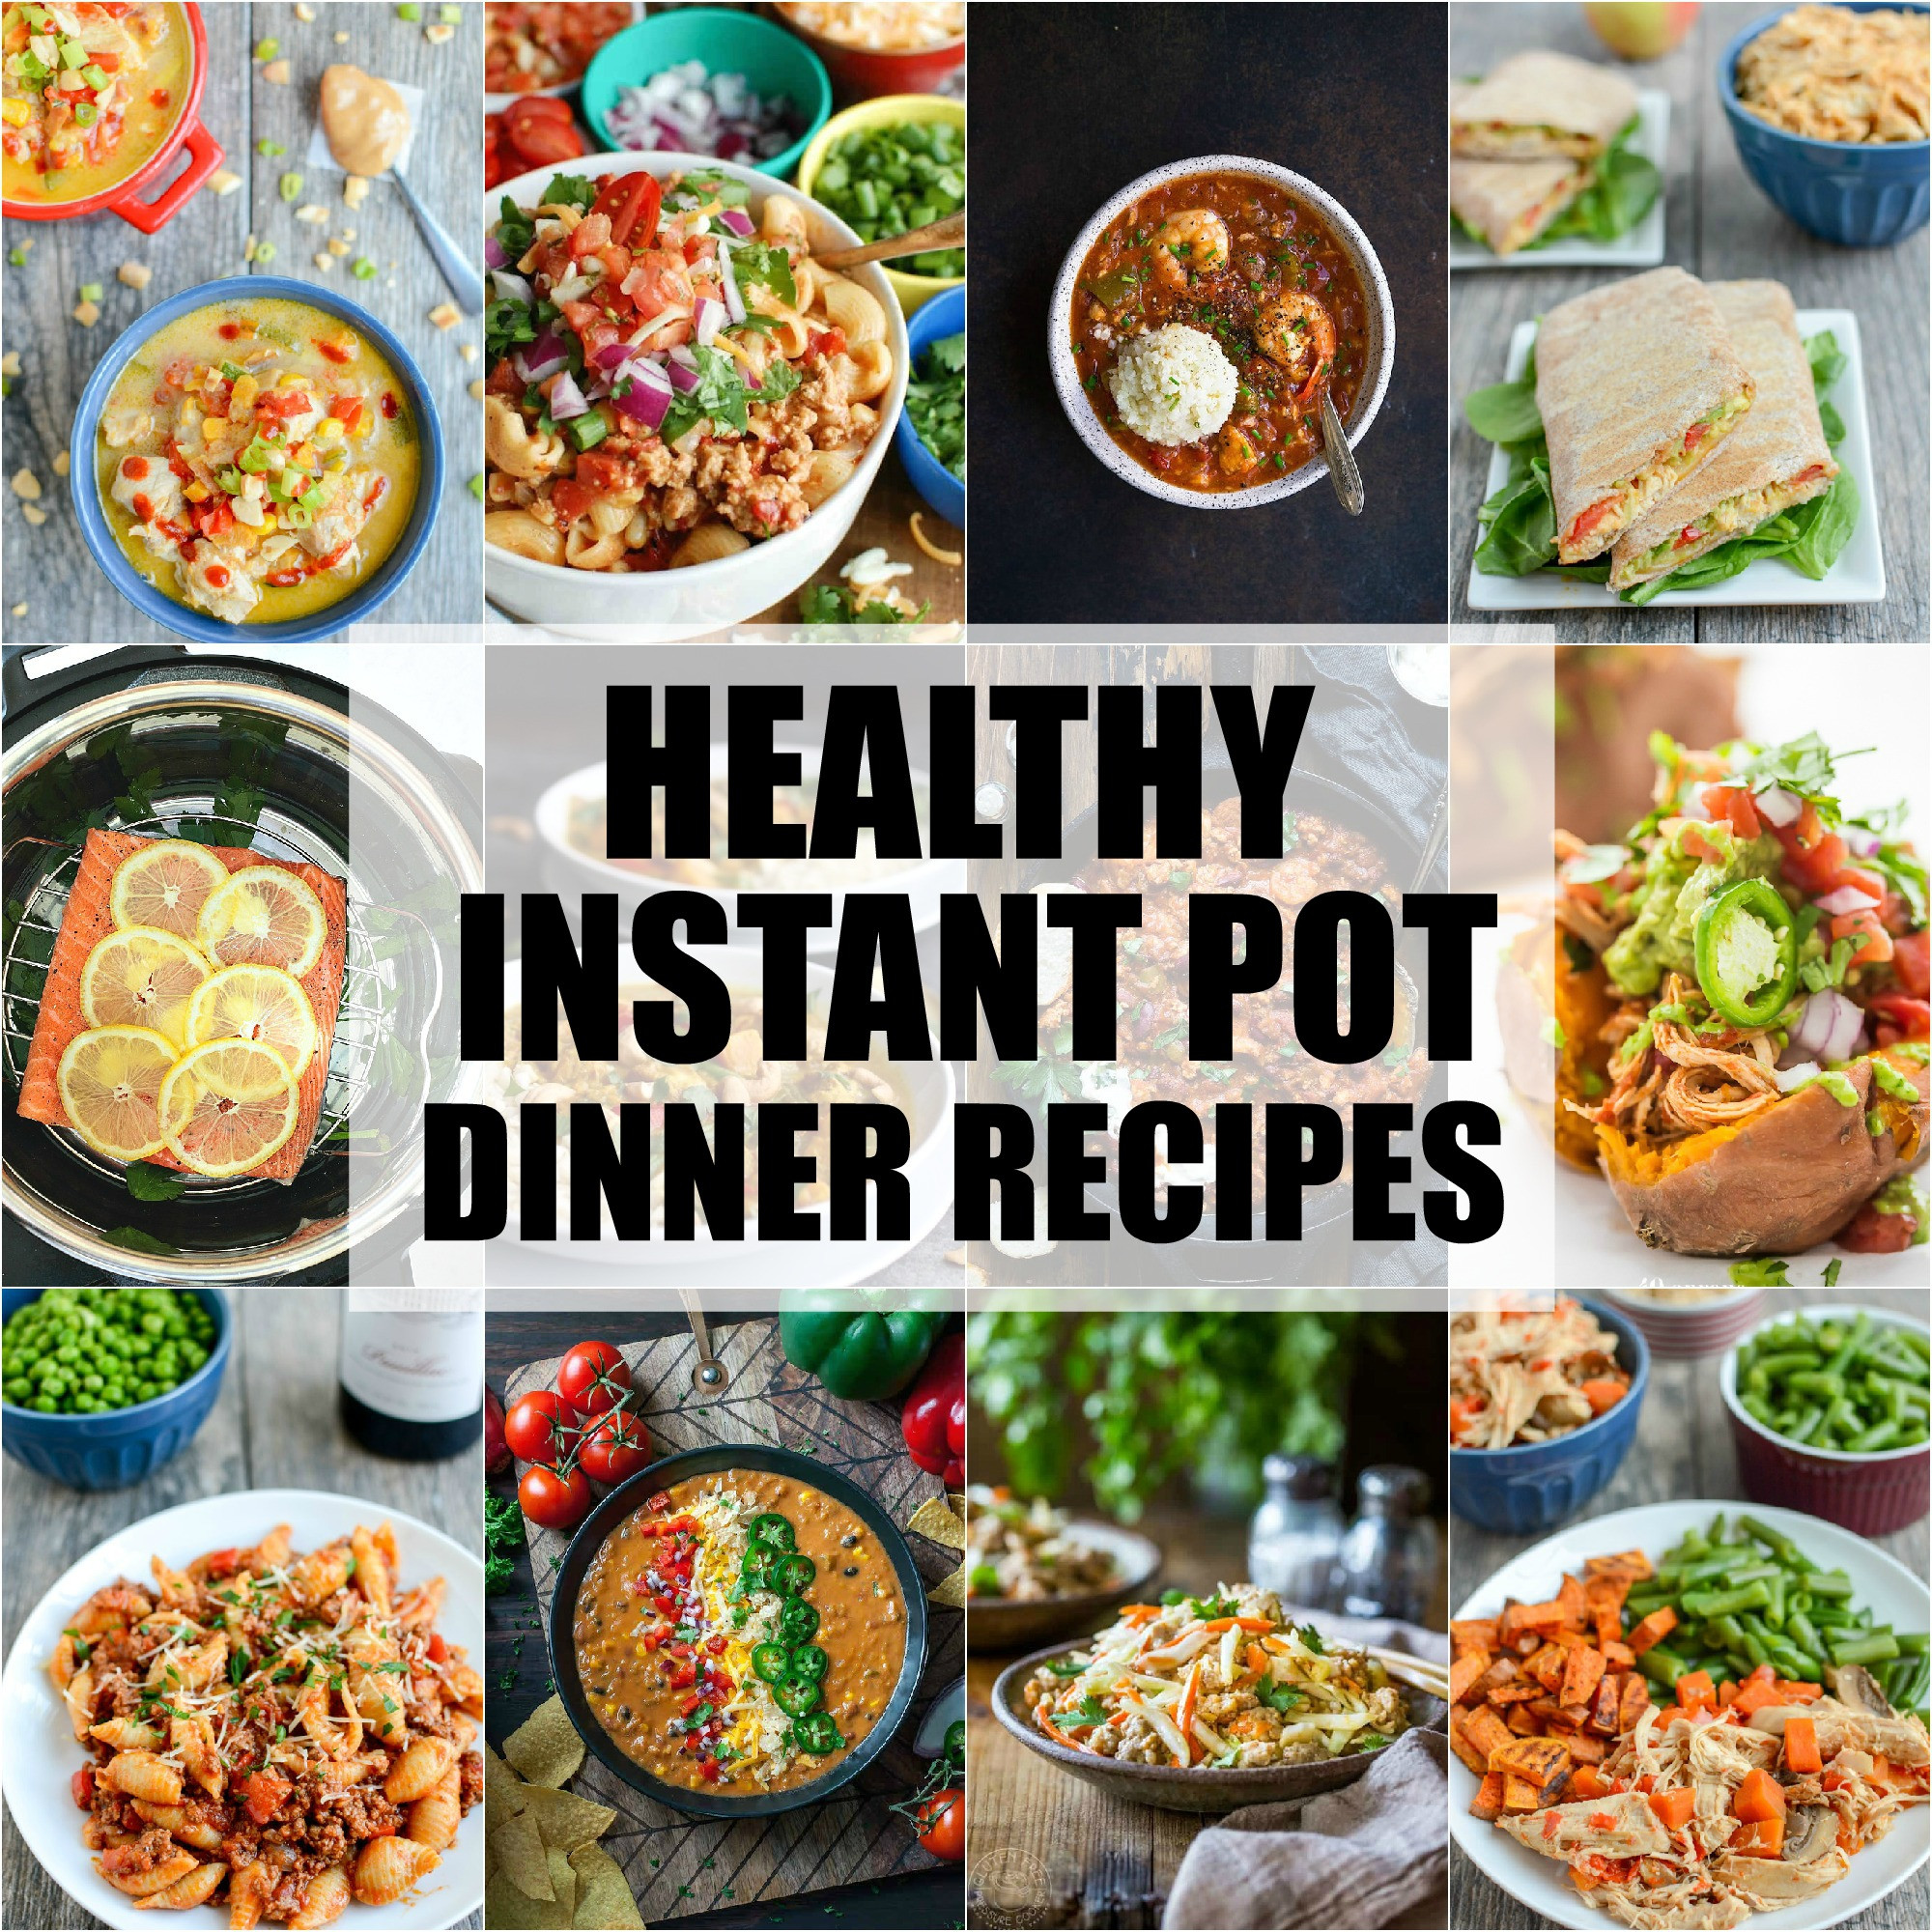 Healthy Instant Pot Desserts
 Healthy Instant Pot Dinner Recipes